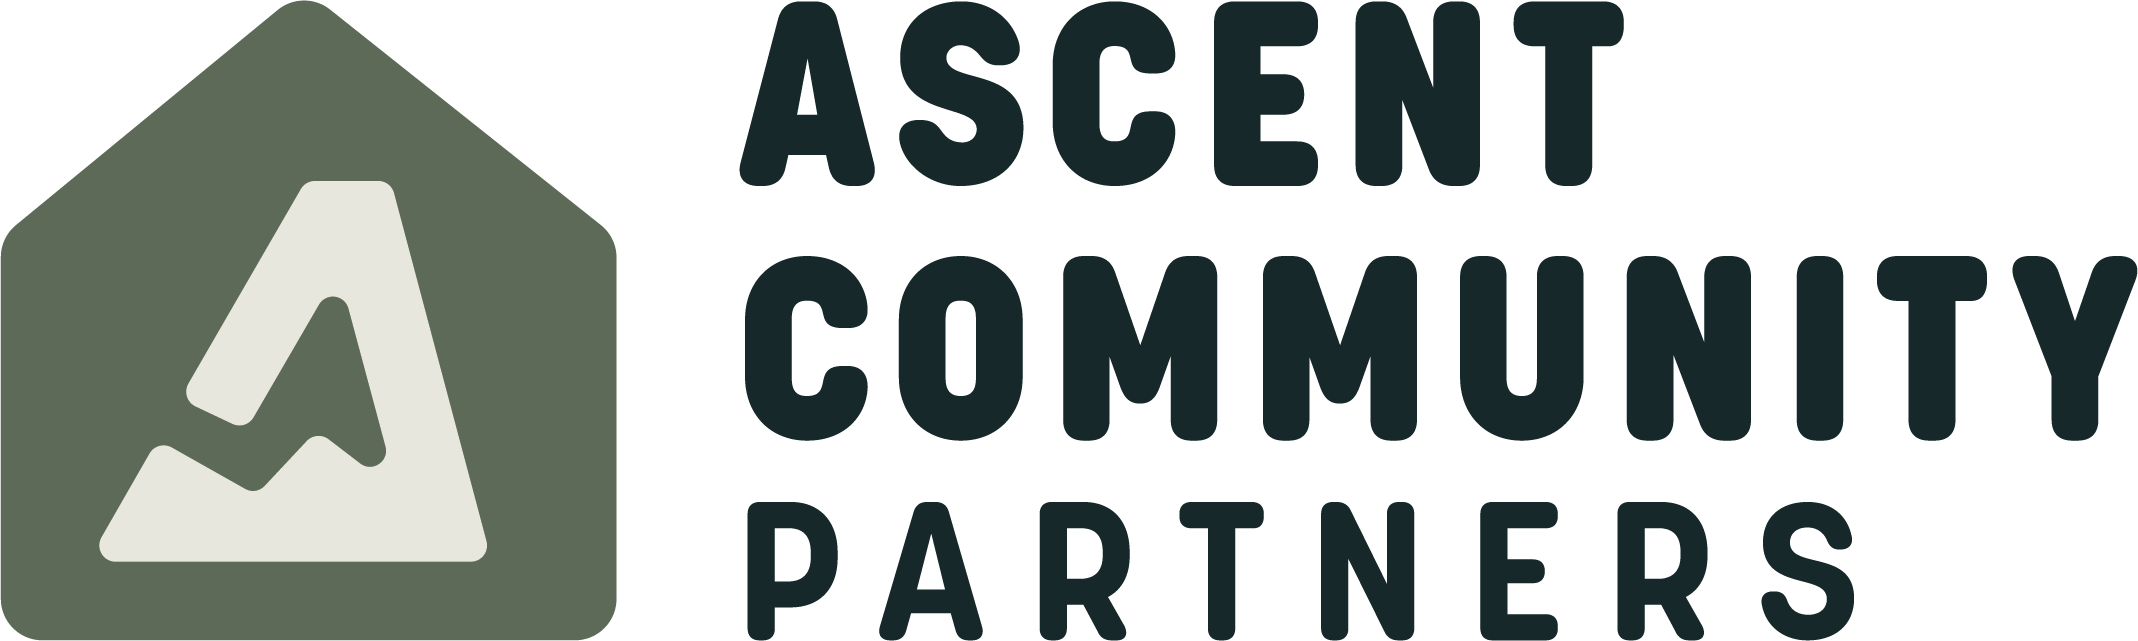 Ascent Community Partners logo